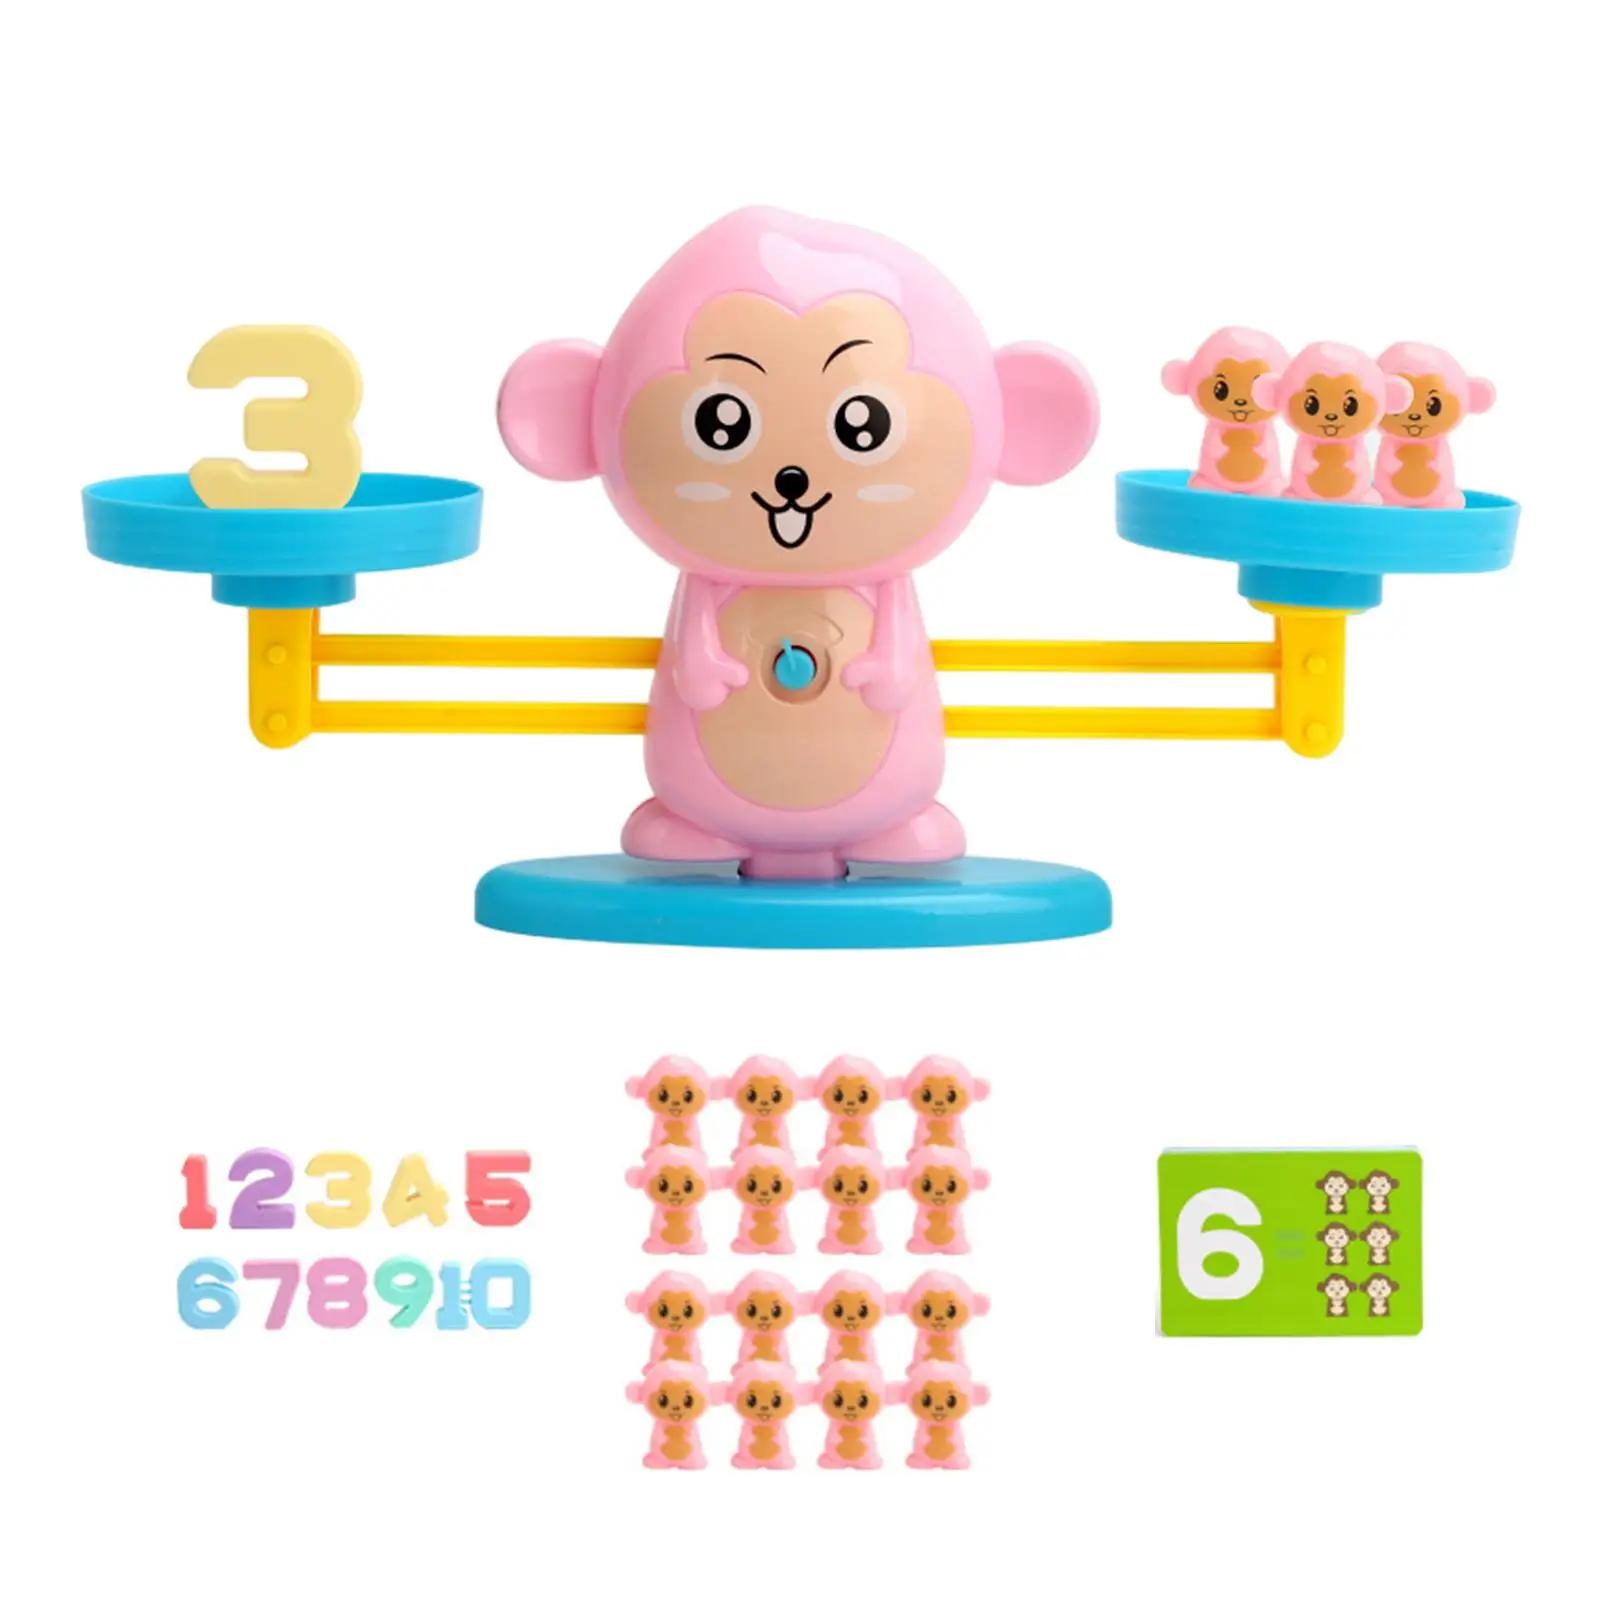 Balance Counting Toys Balance Math Game Balance Scales Boy Girl Children